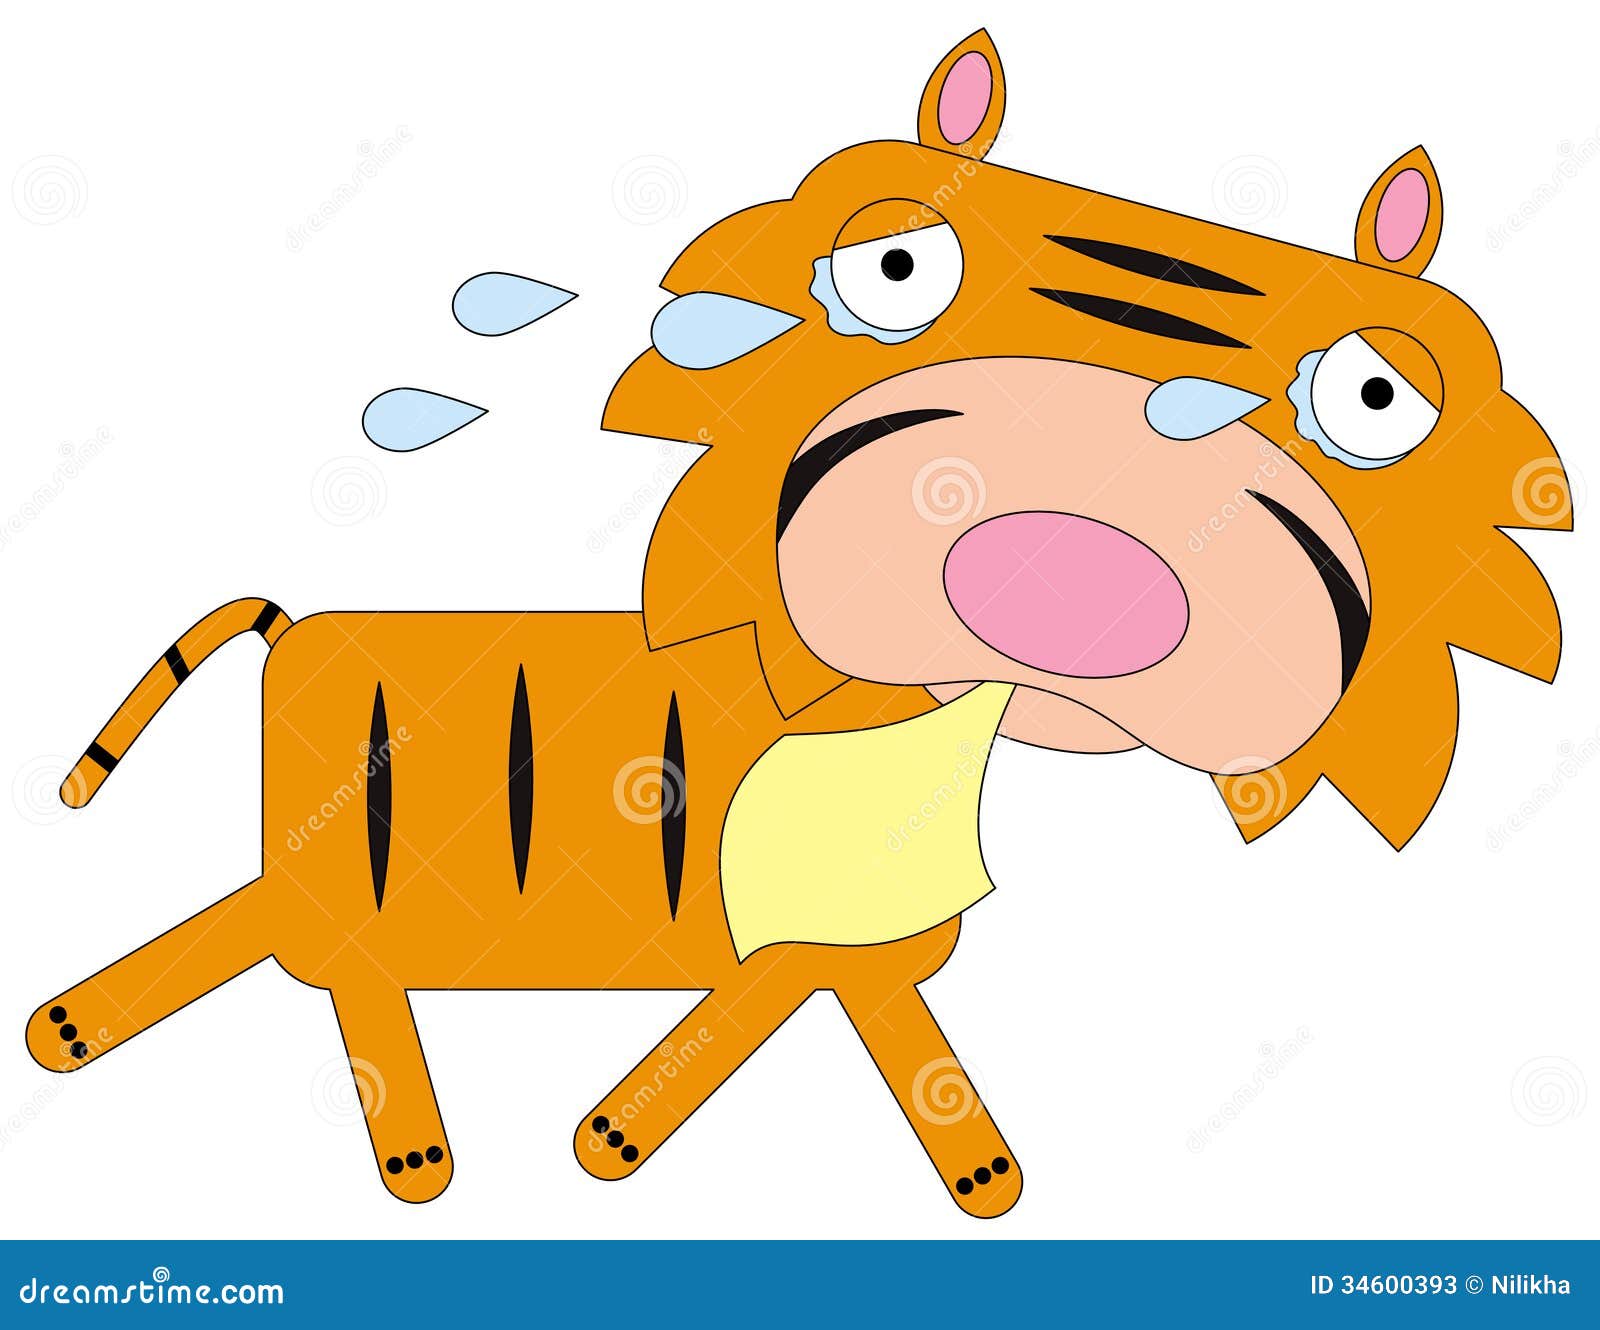 tiger-cries-humorous-illustration-running-crying-handkerchief-34600393.jpg